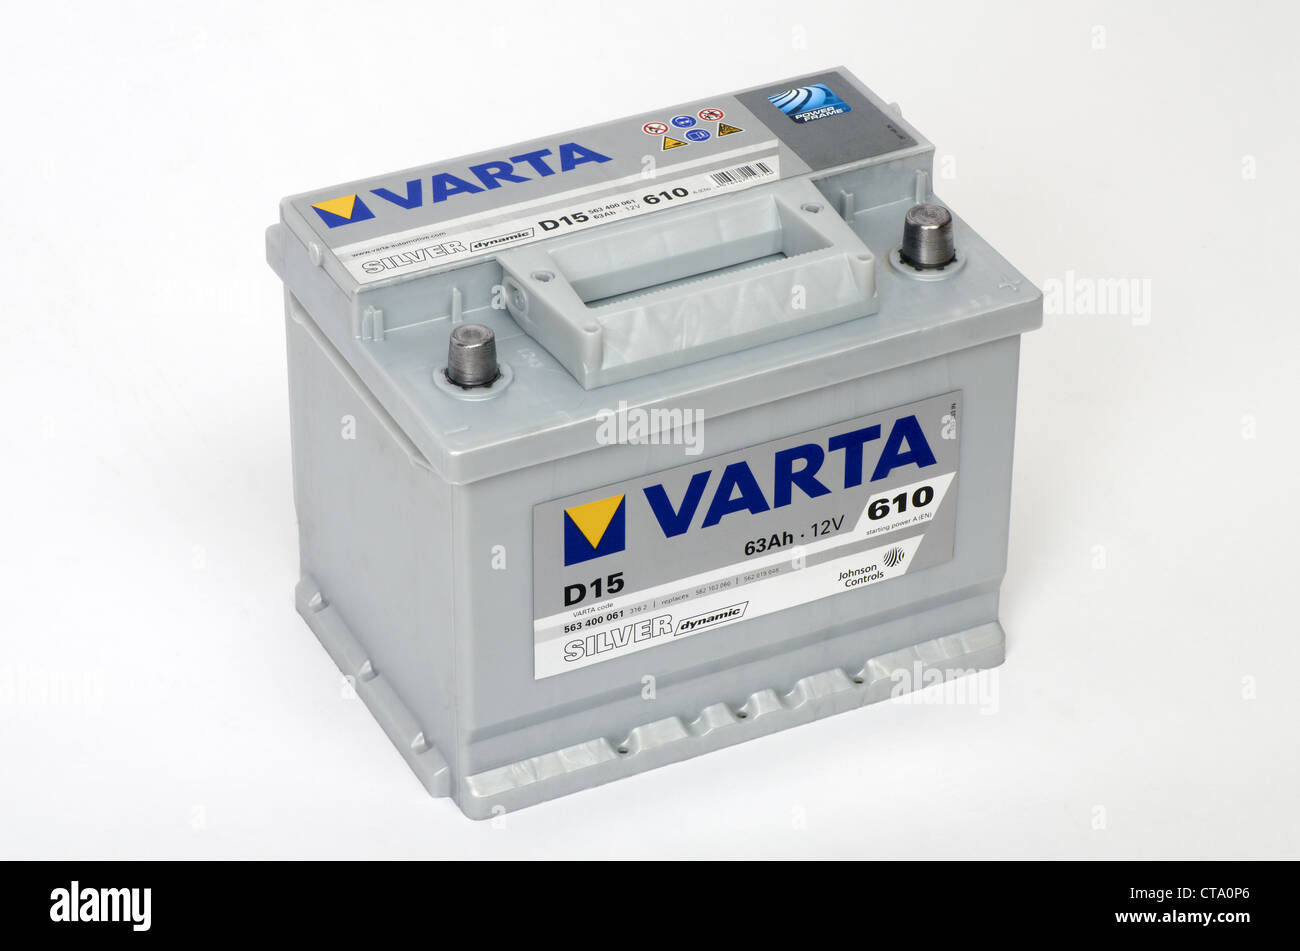 VARTA Silver Dynamic D15 Autobatterie, 563 400 061, 12 V, 63 Ah